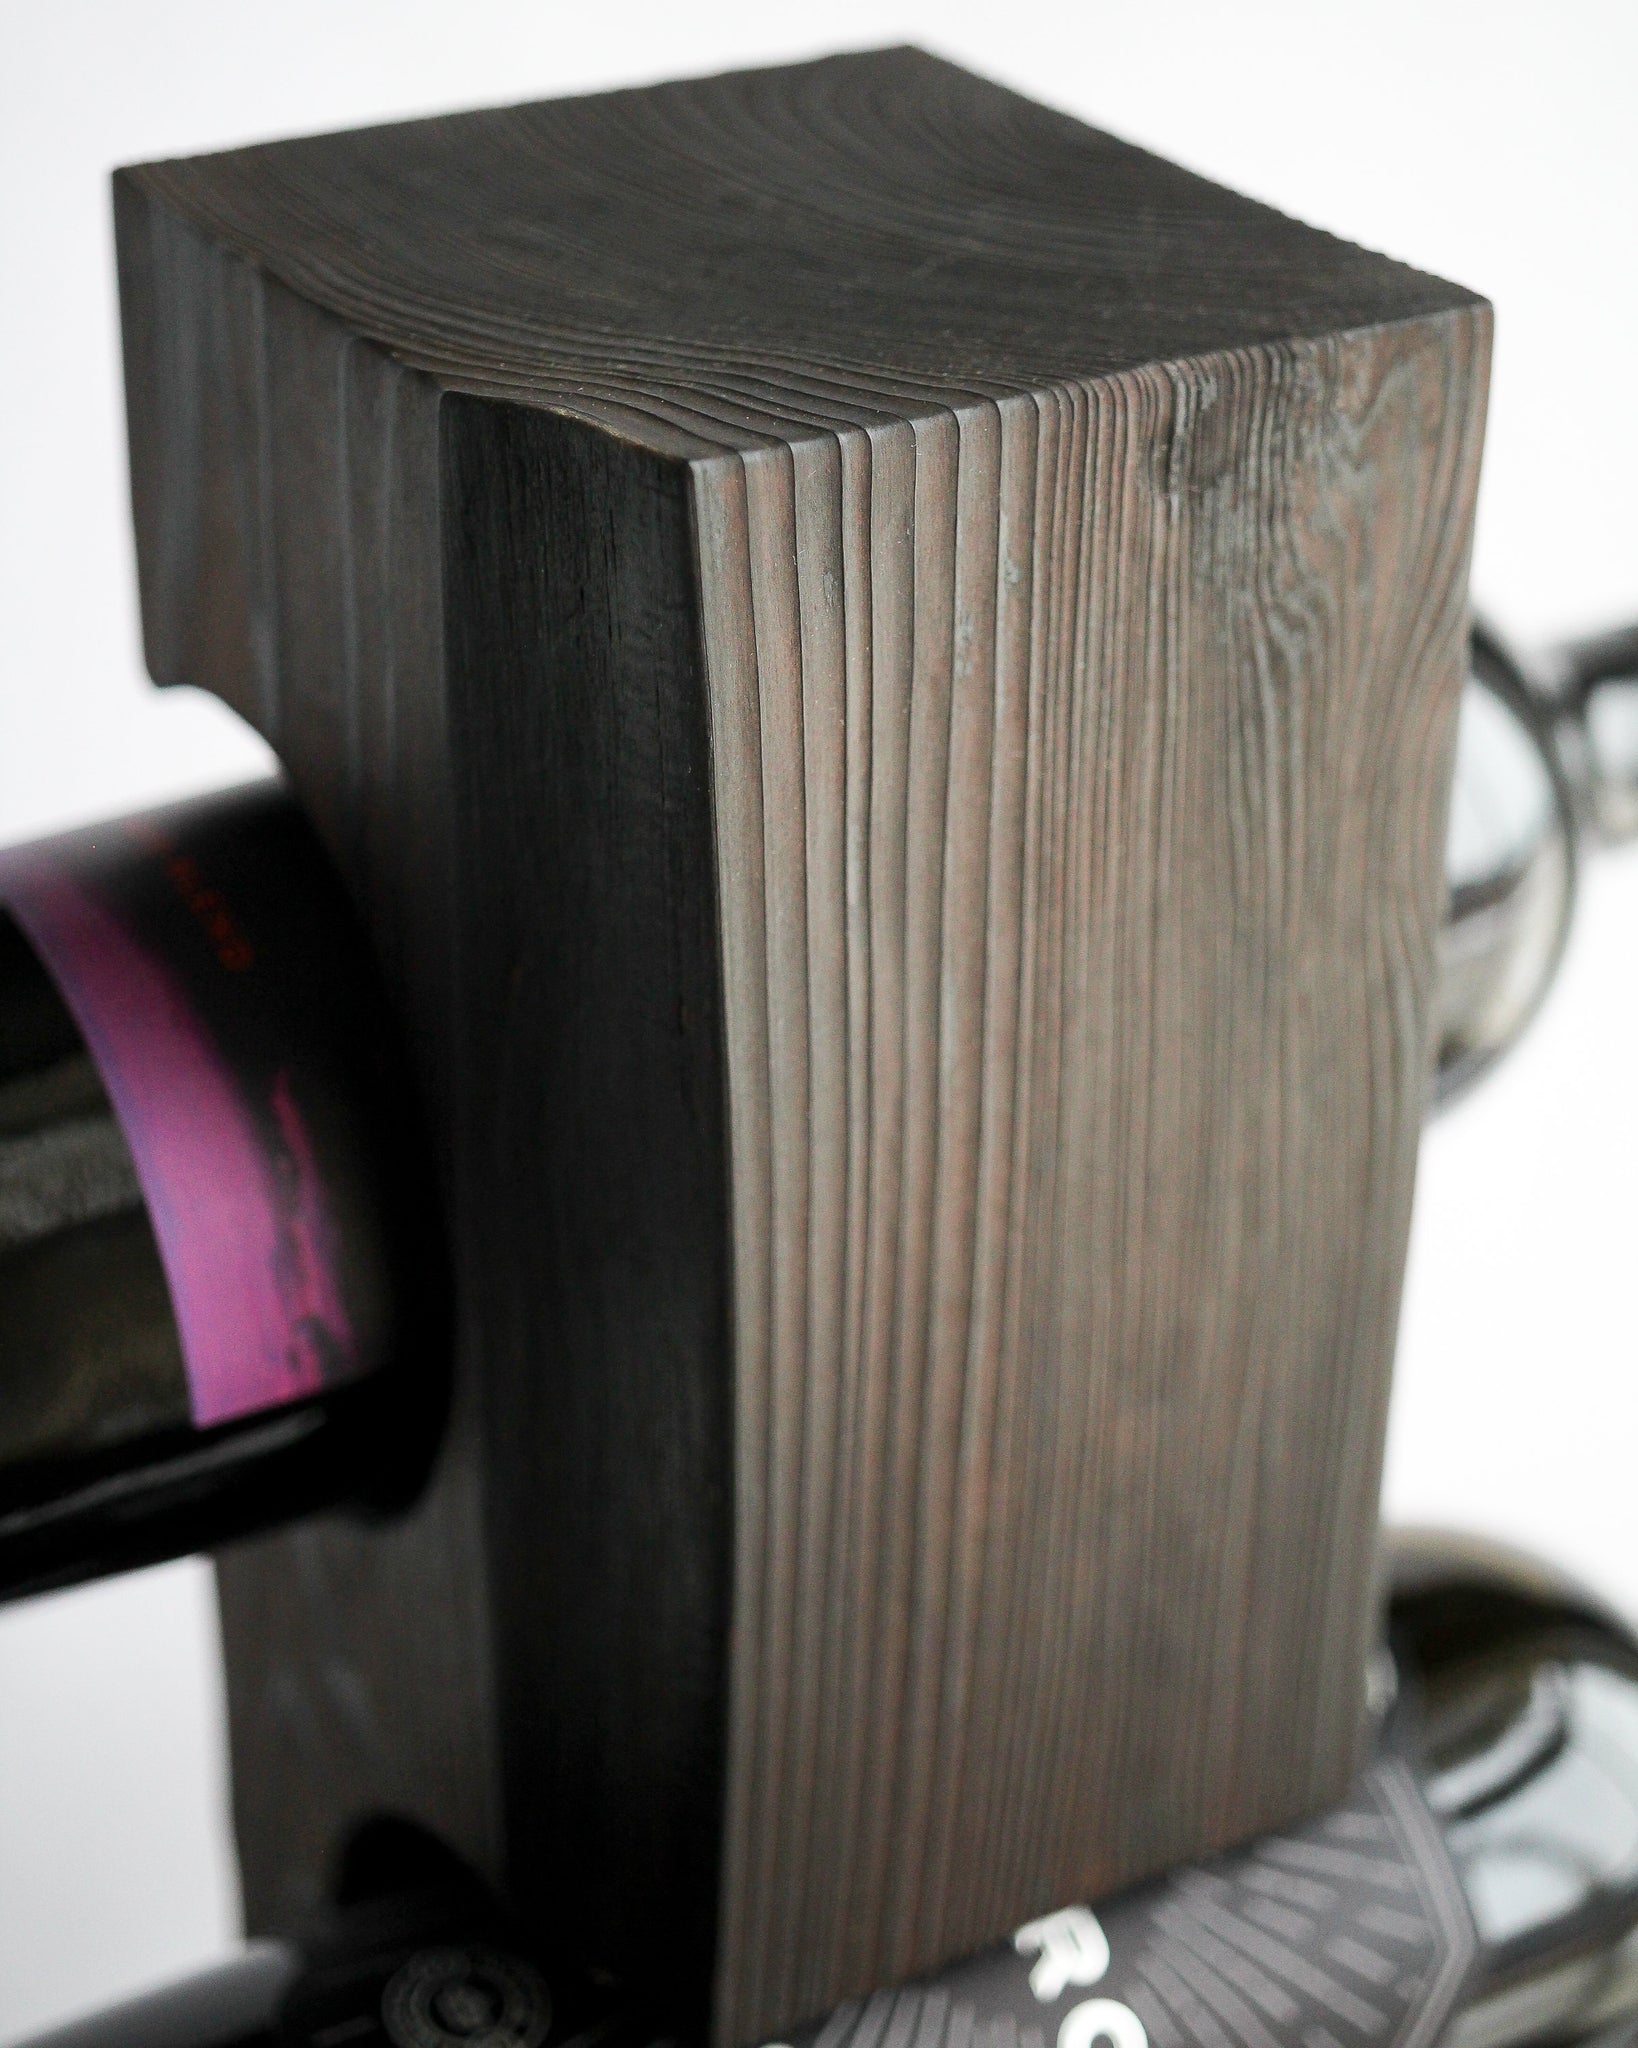 Shou Sugi Ban Tabletop Wine Rack, Charred Cedar with Welded Steel Base